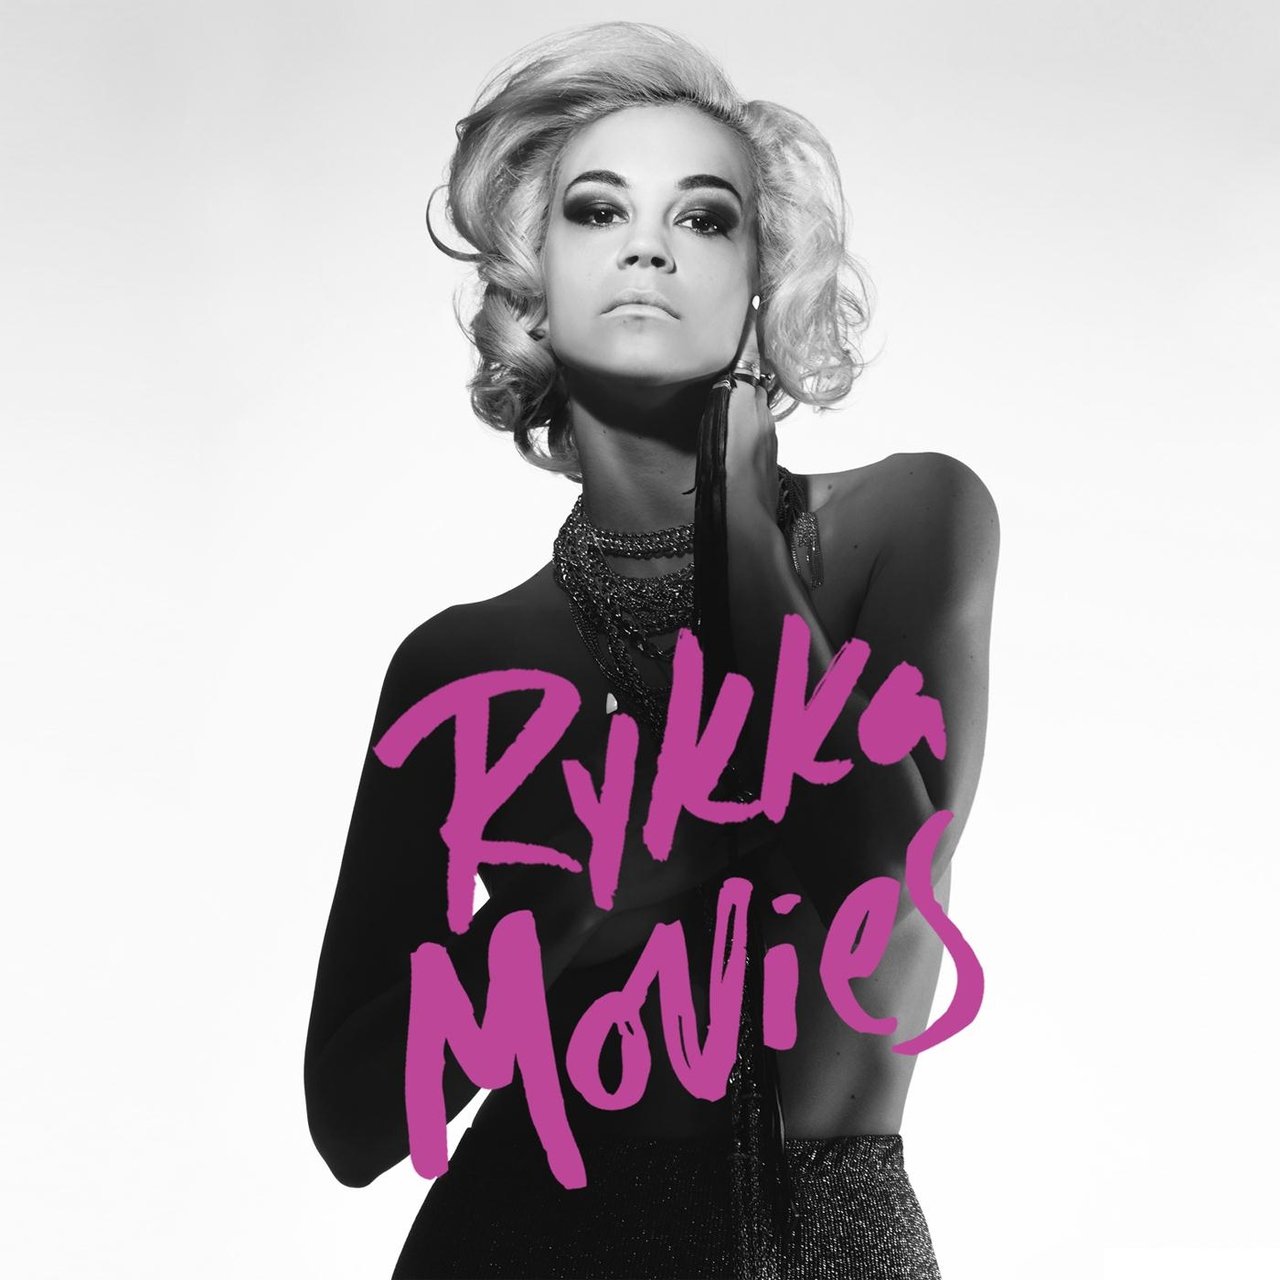 Rykka — Movies cover artwork